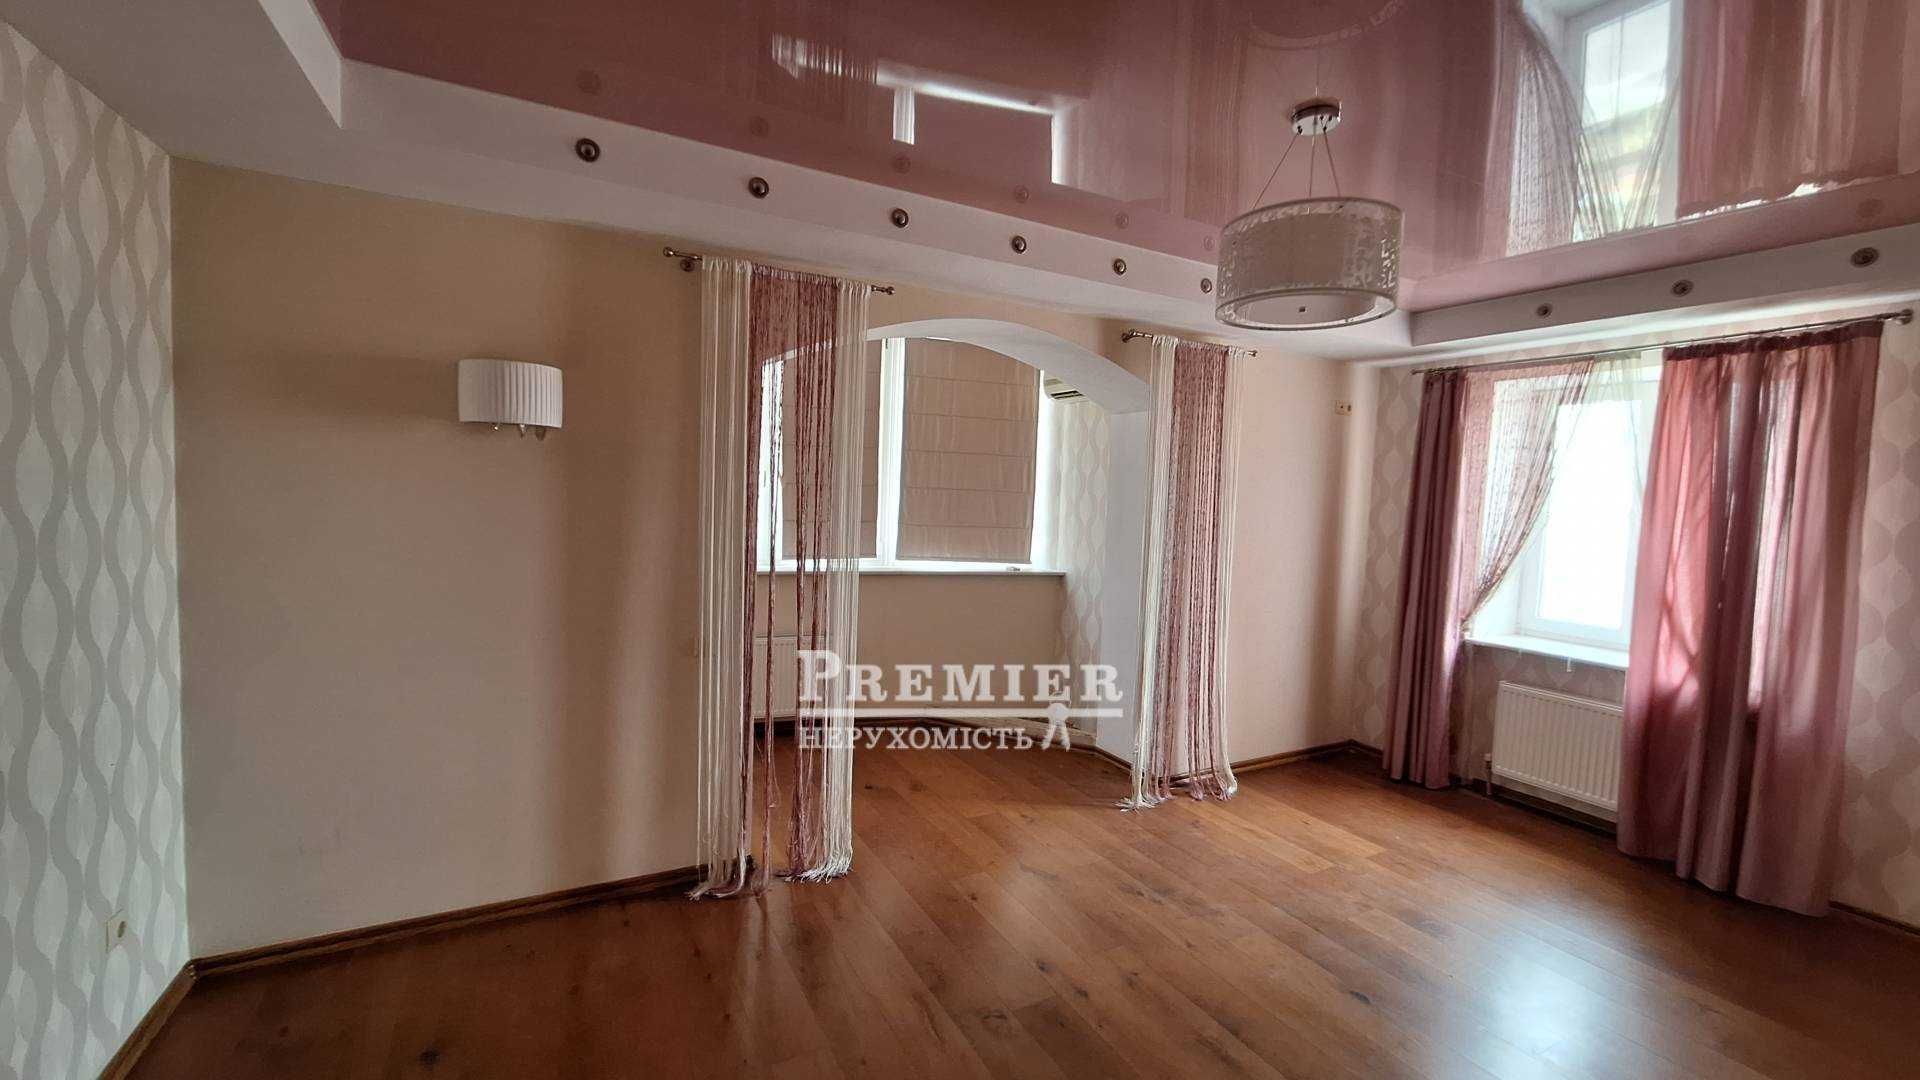 Продам 3-кімнатну квартиру 107 м.кв. з гарним ремонтом.